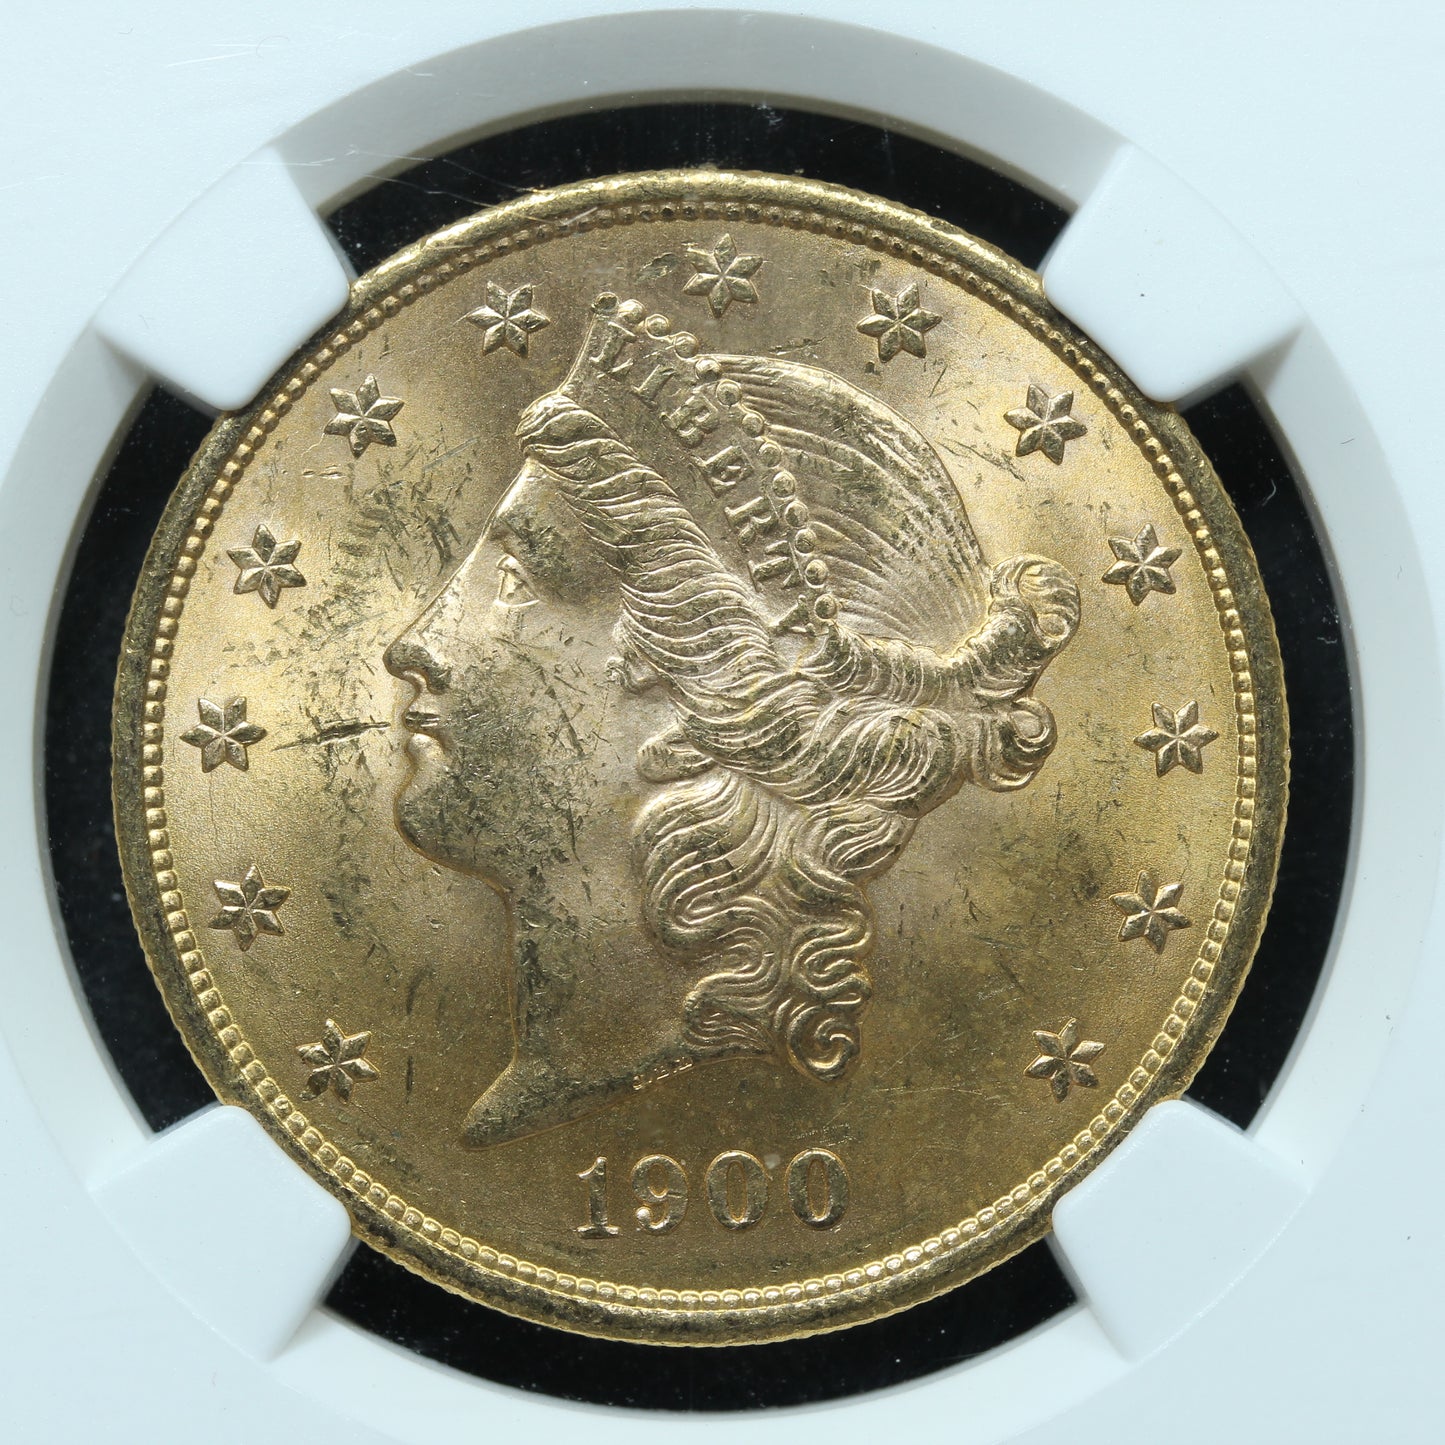 1900 US Gold $20 Liberty Head Double Eagle - NGC MS64